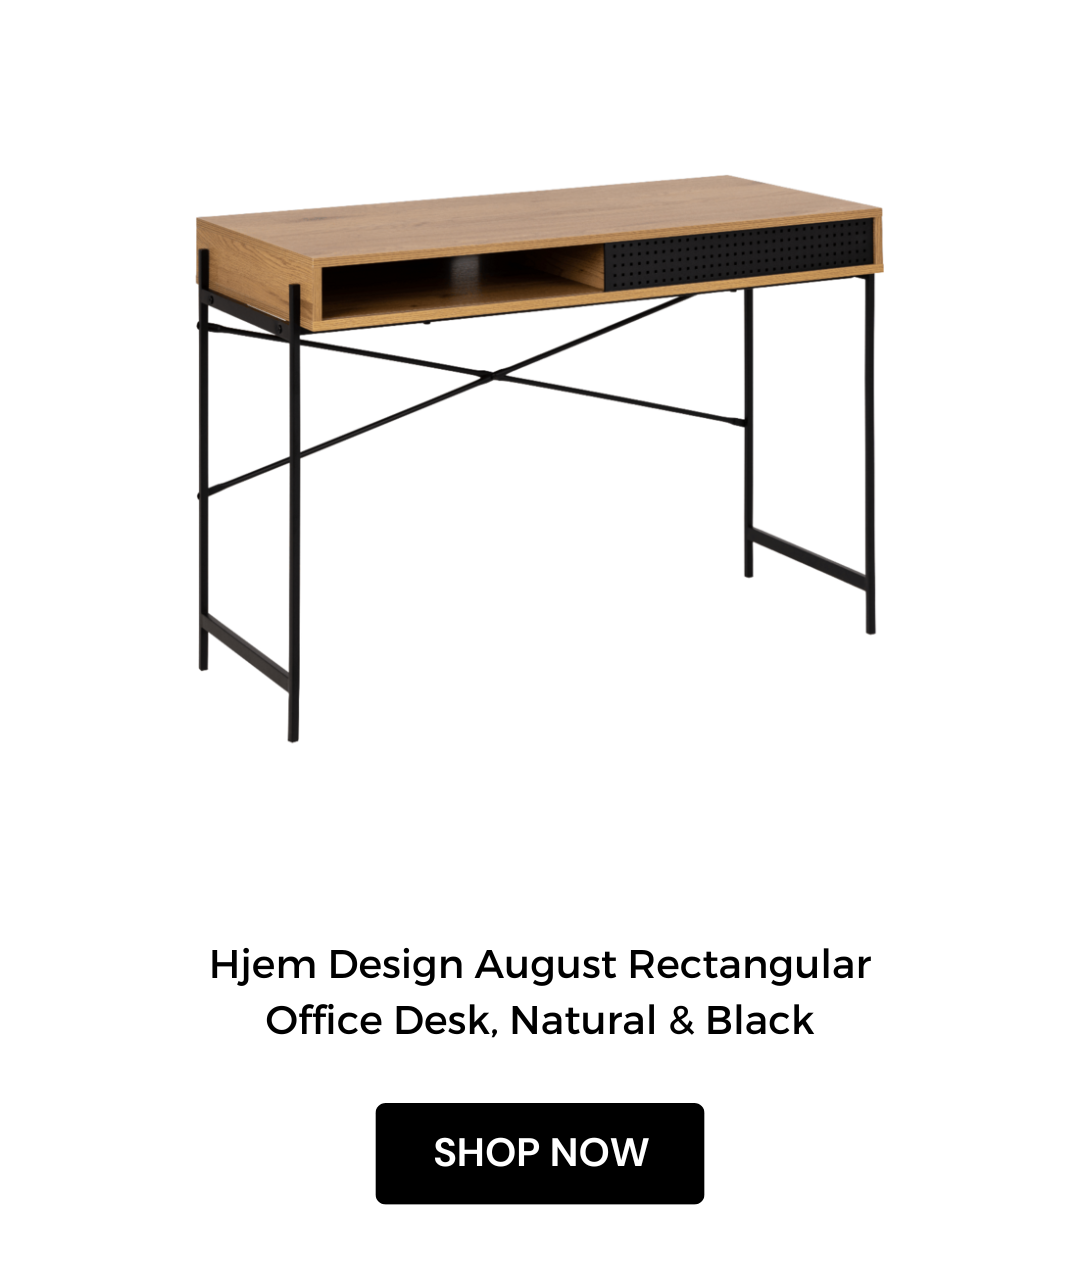 Hjem Design August Rectangular Office Desk, Natural & Black